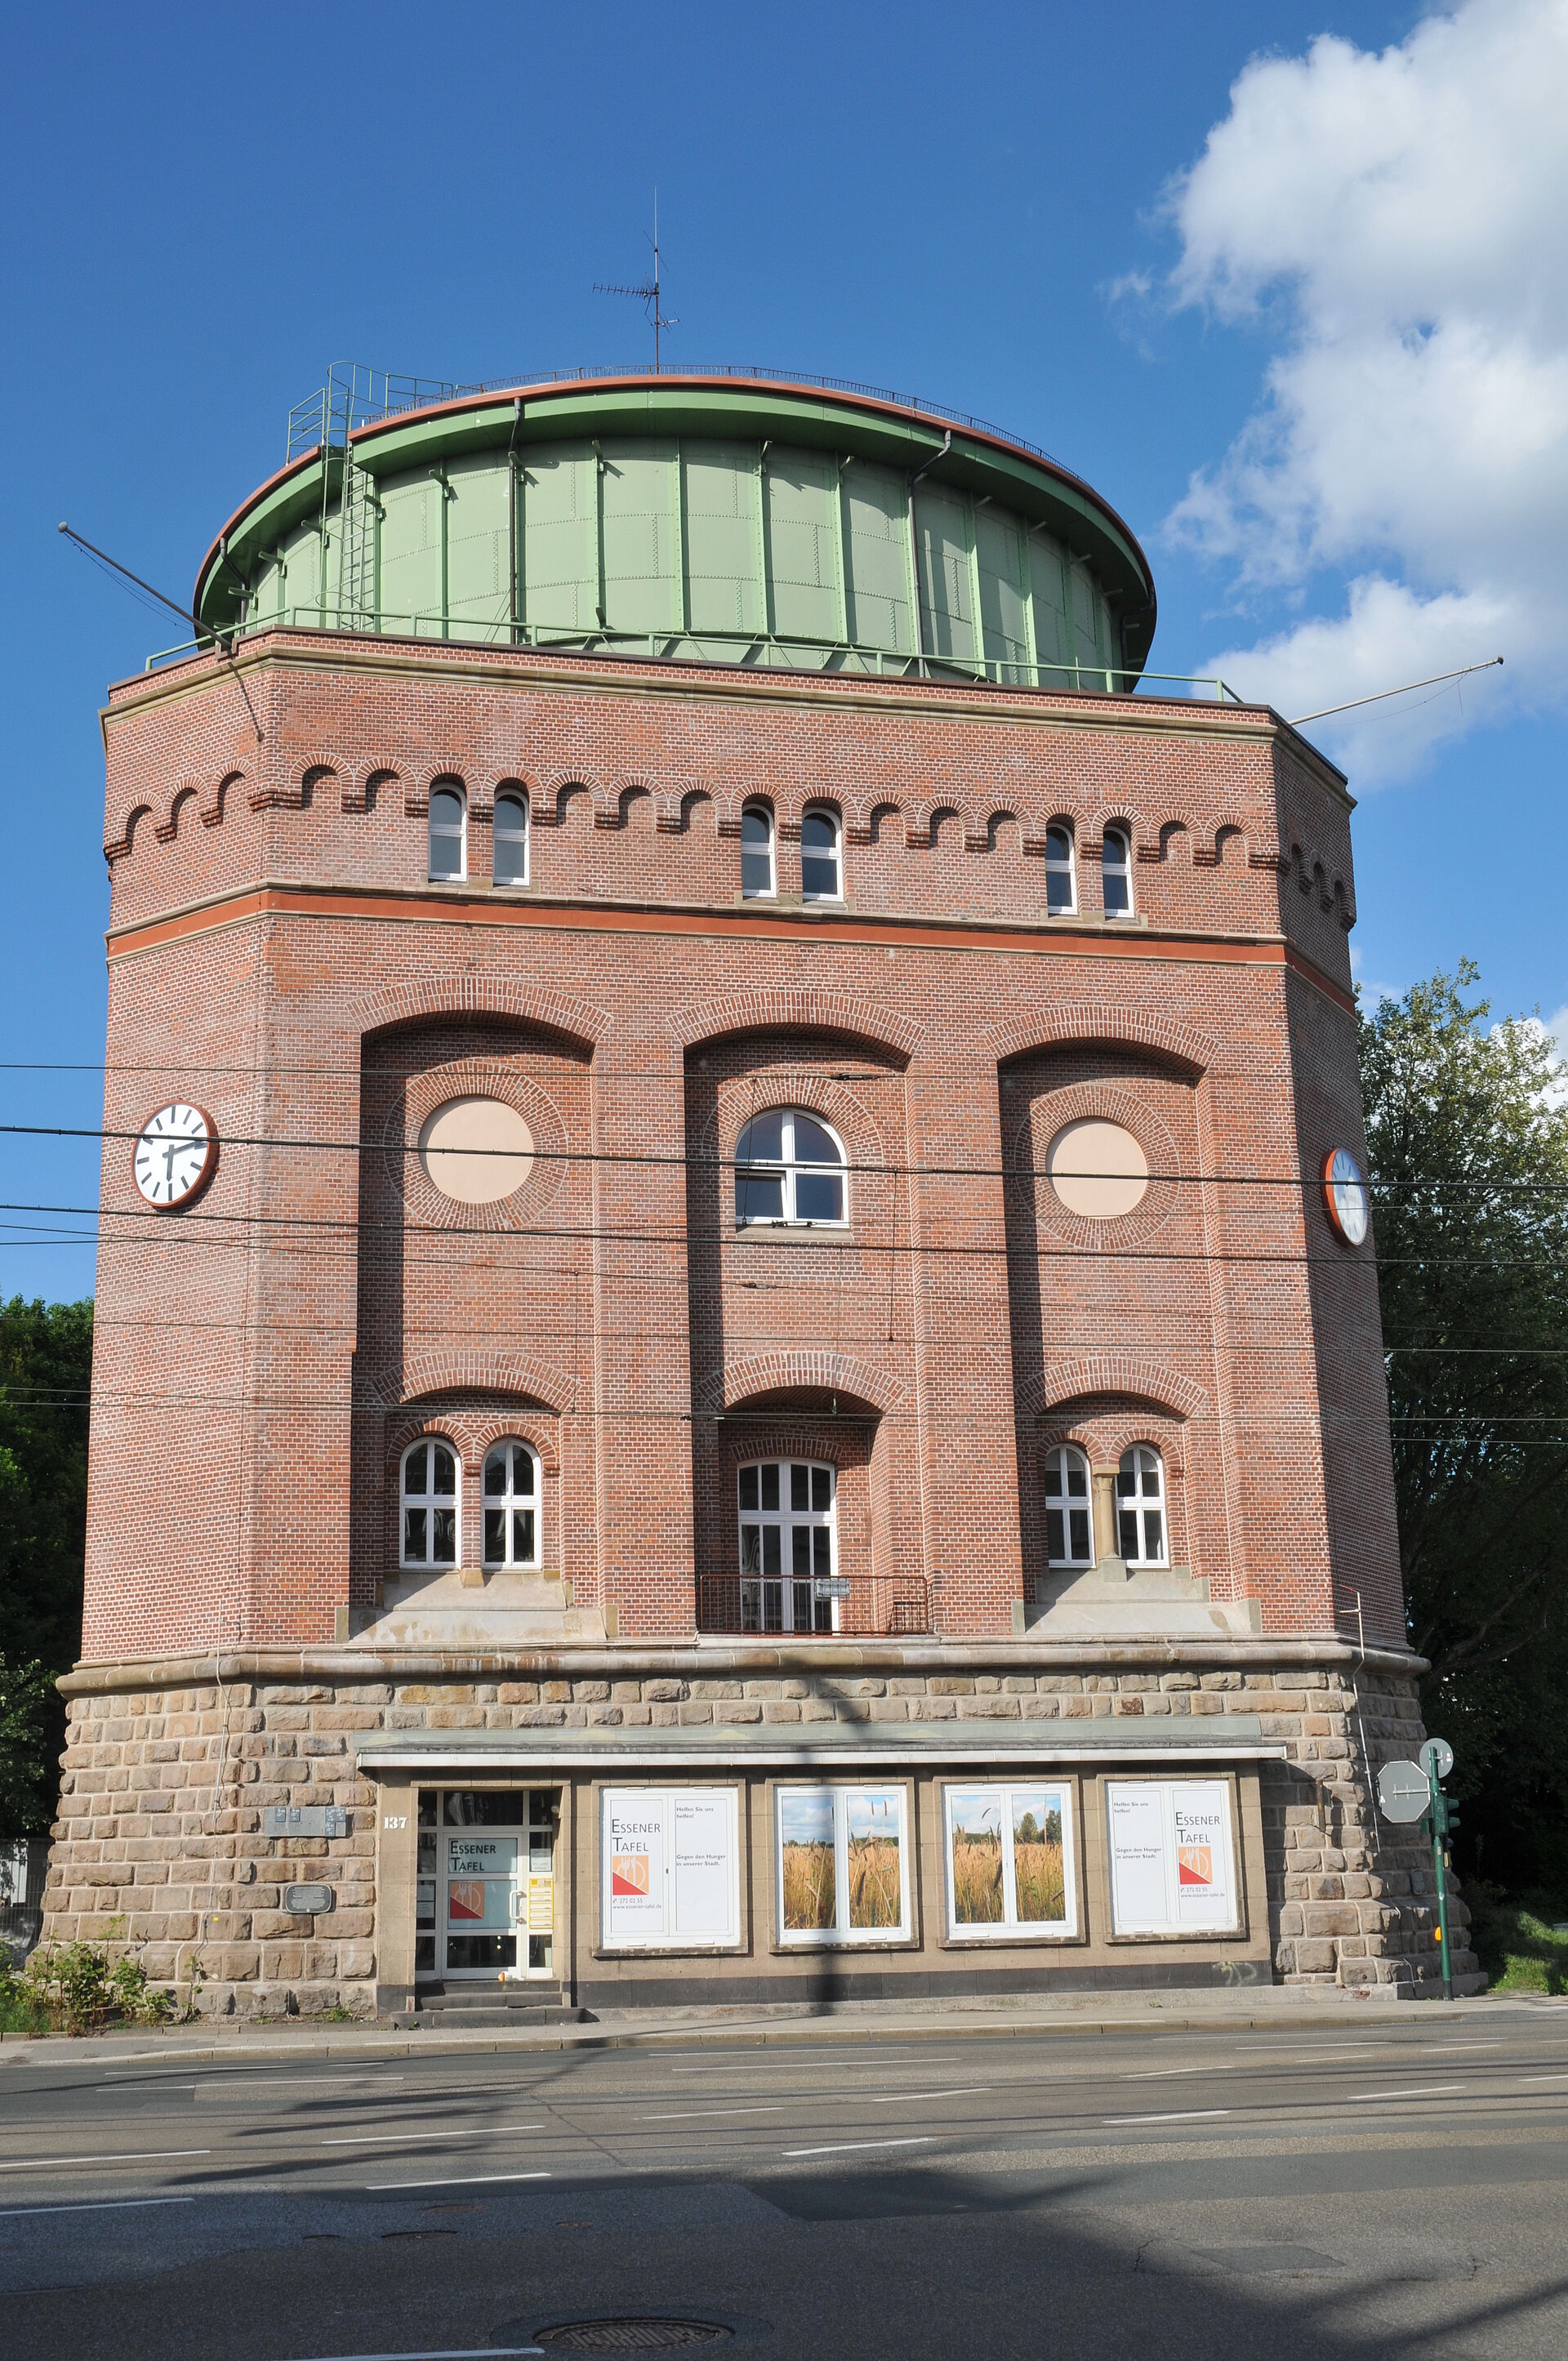 Wasserturm Steeler Berg in Essen.